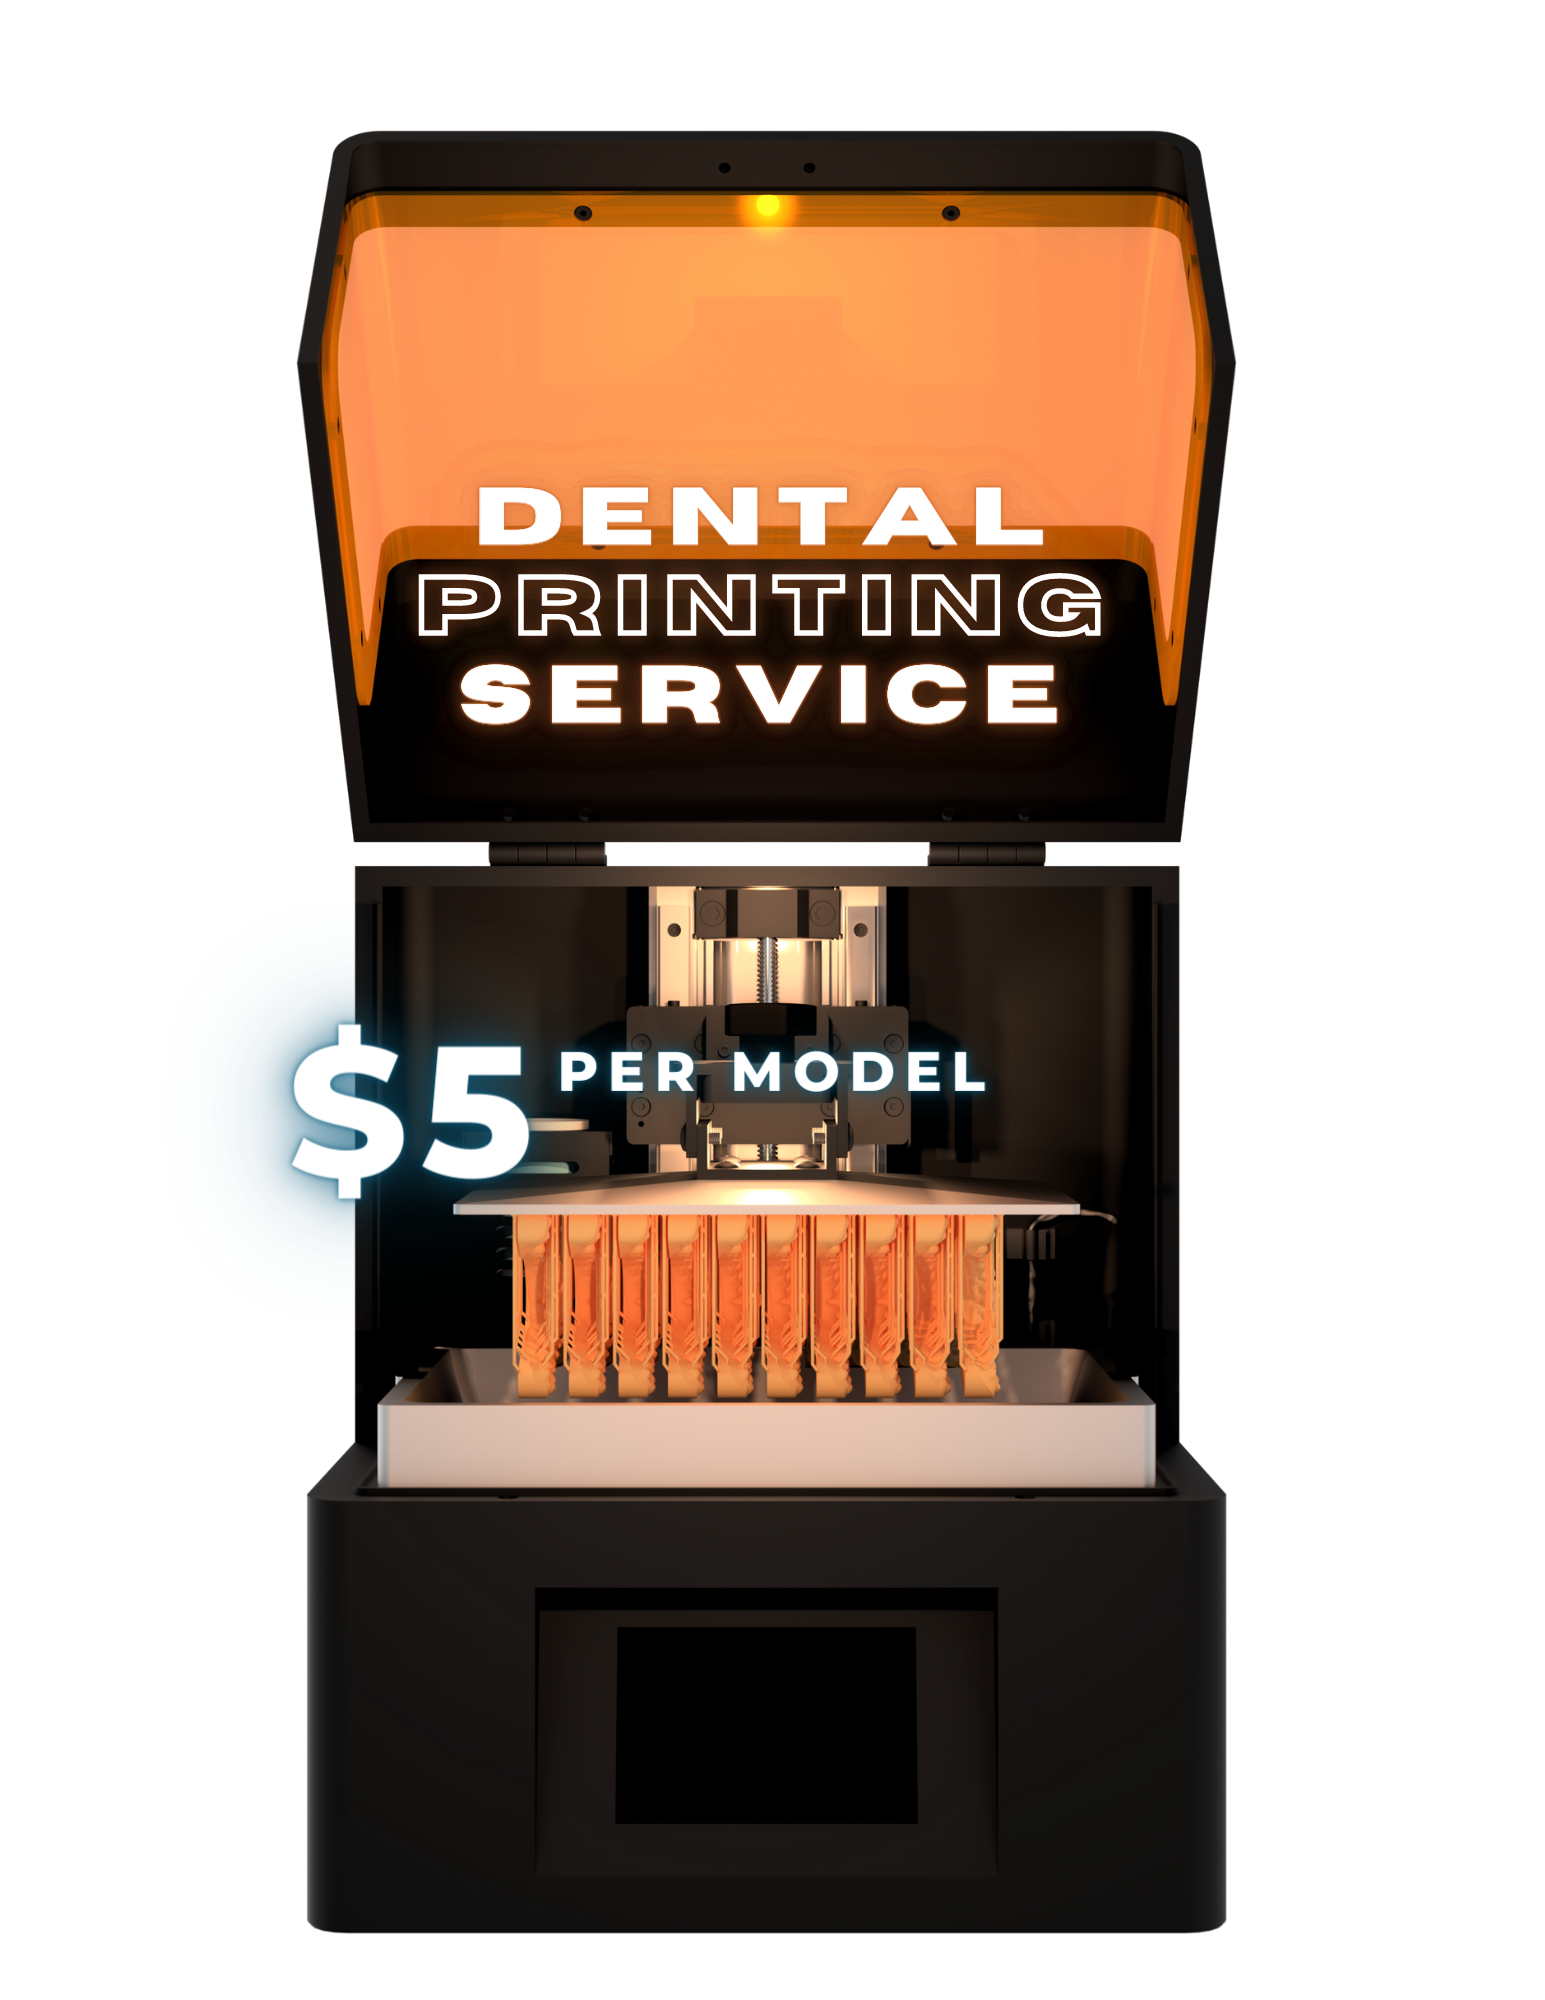 Dental Printing Service - $5 Per Model 2 Days Turnaround Time